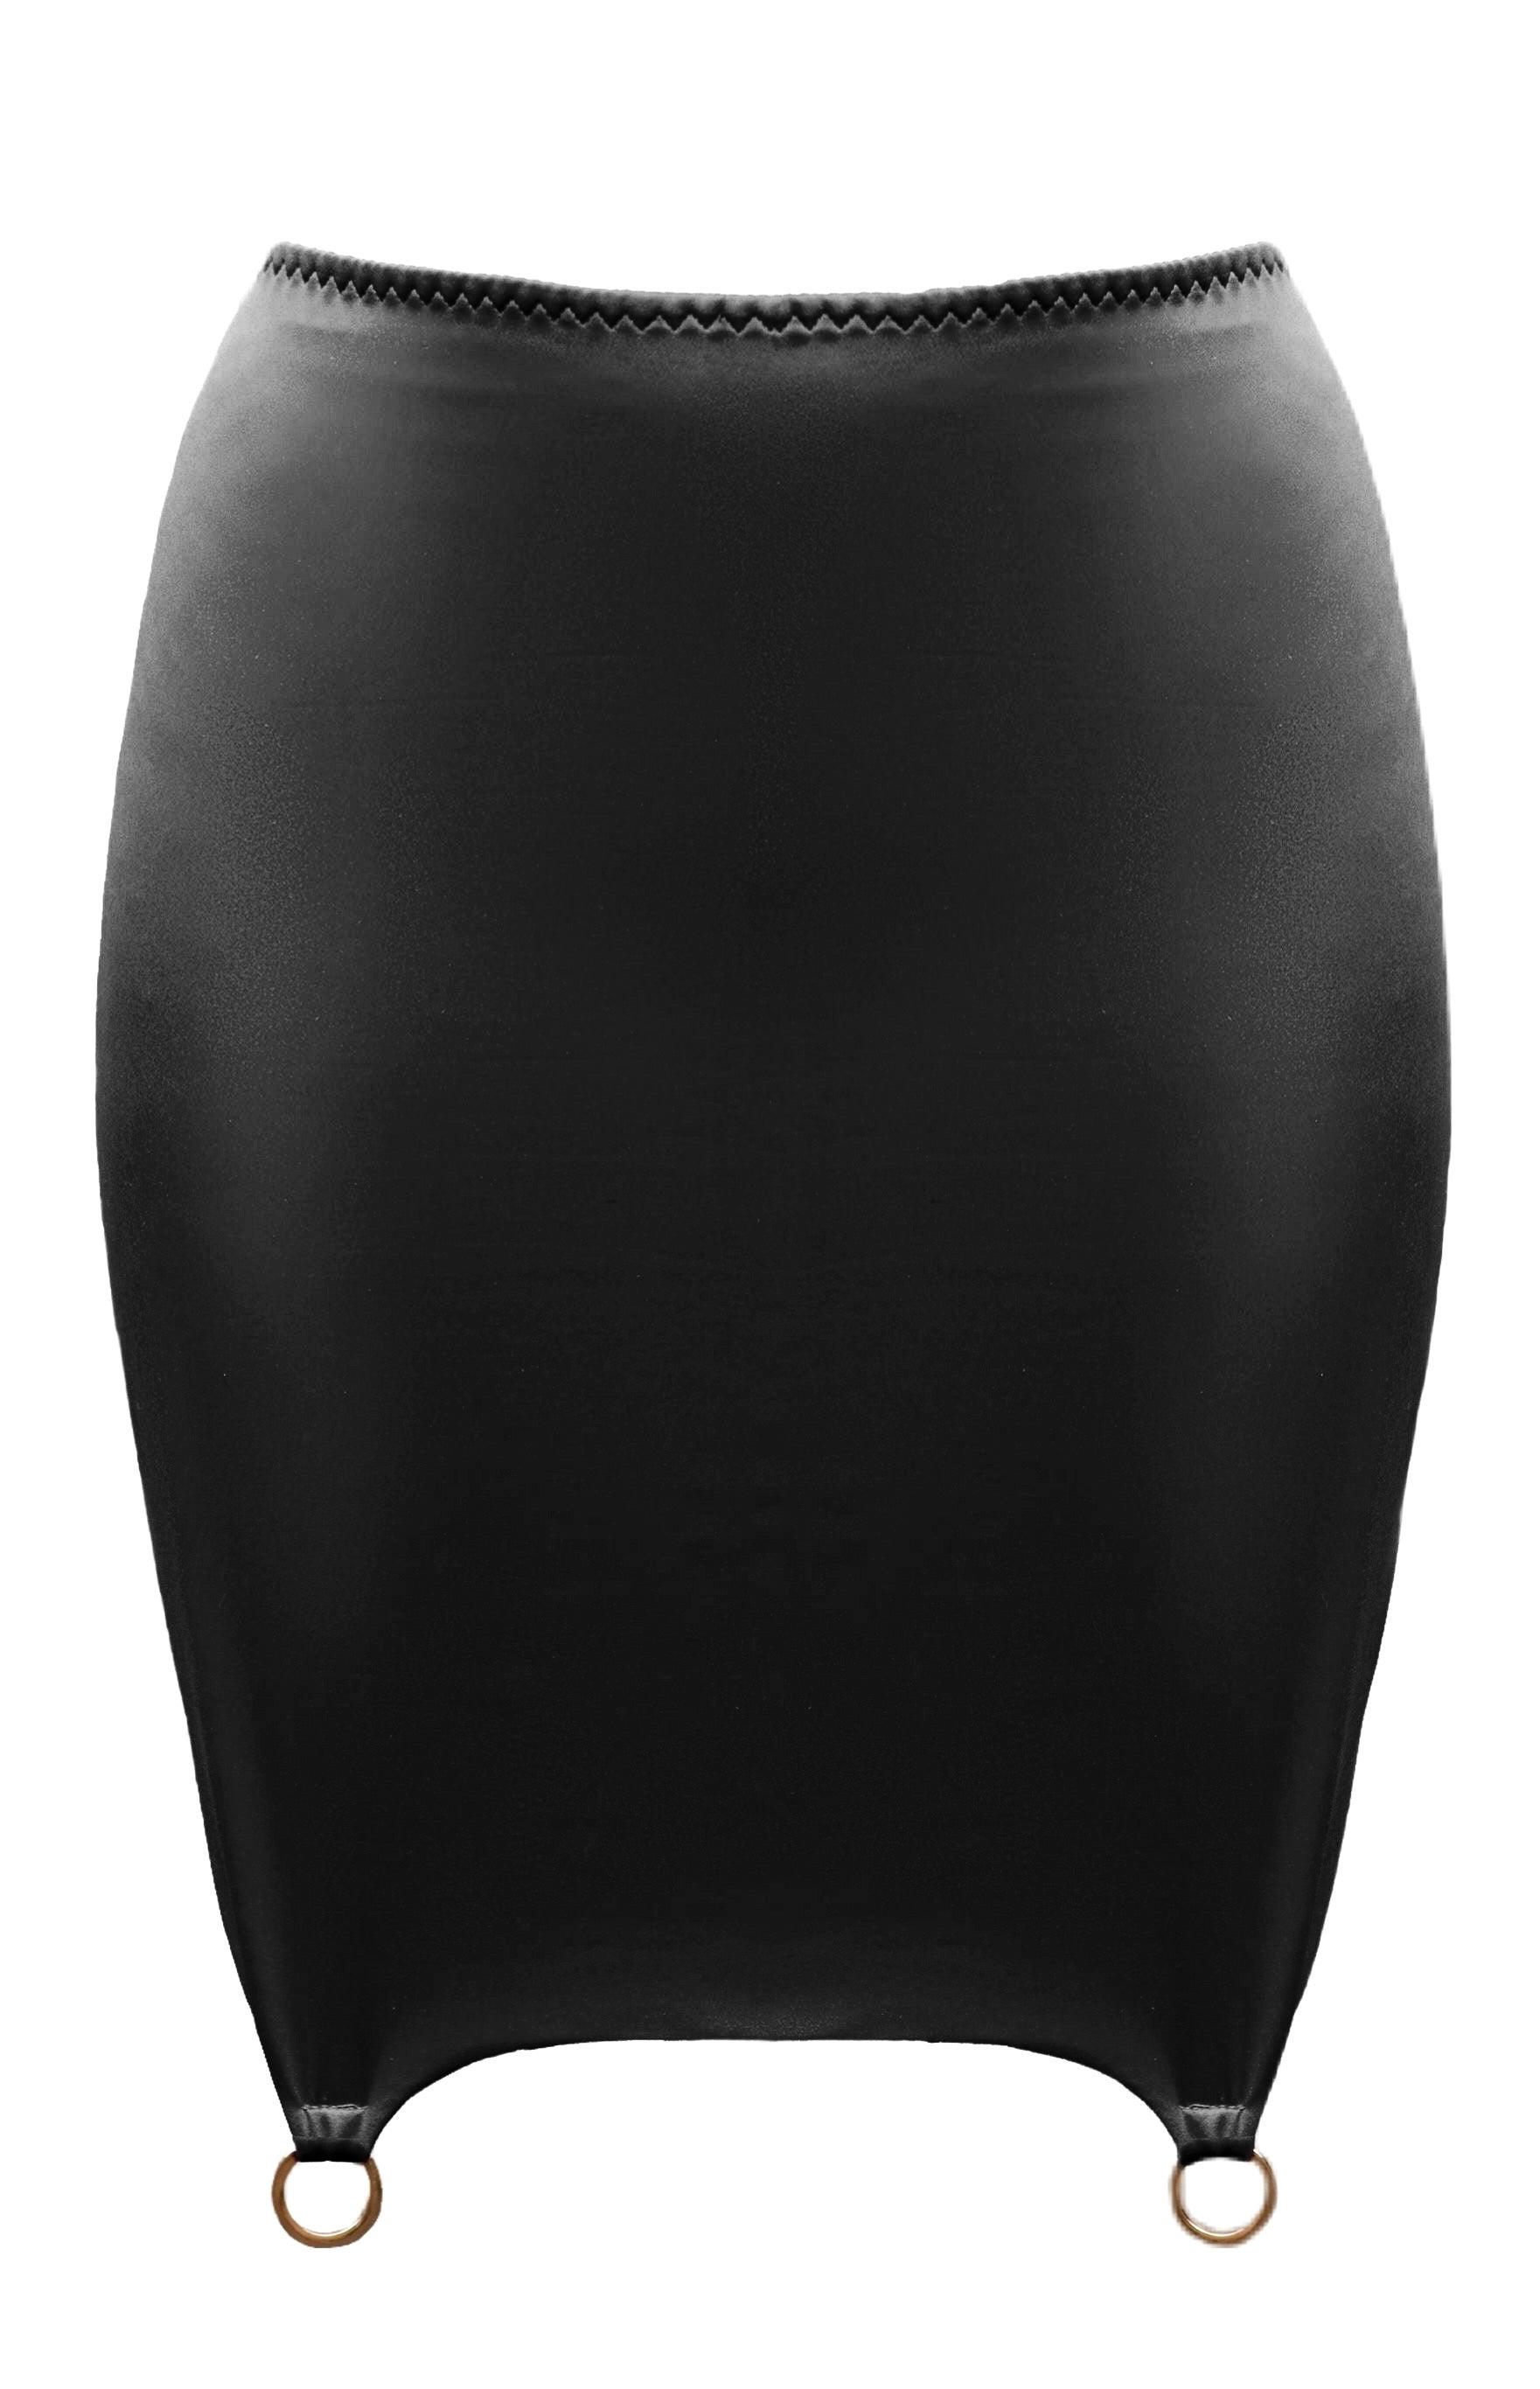 Cymothoe Black skirt - yesUndress